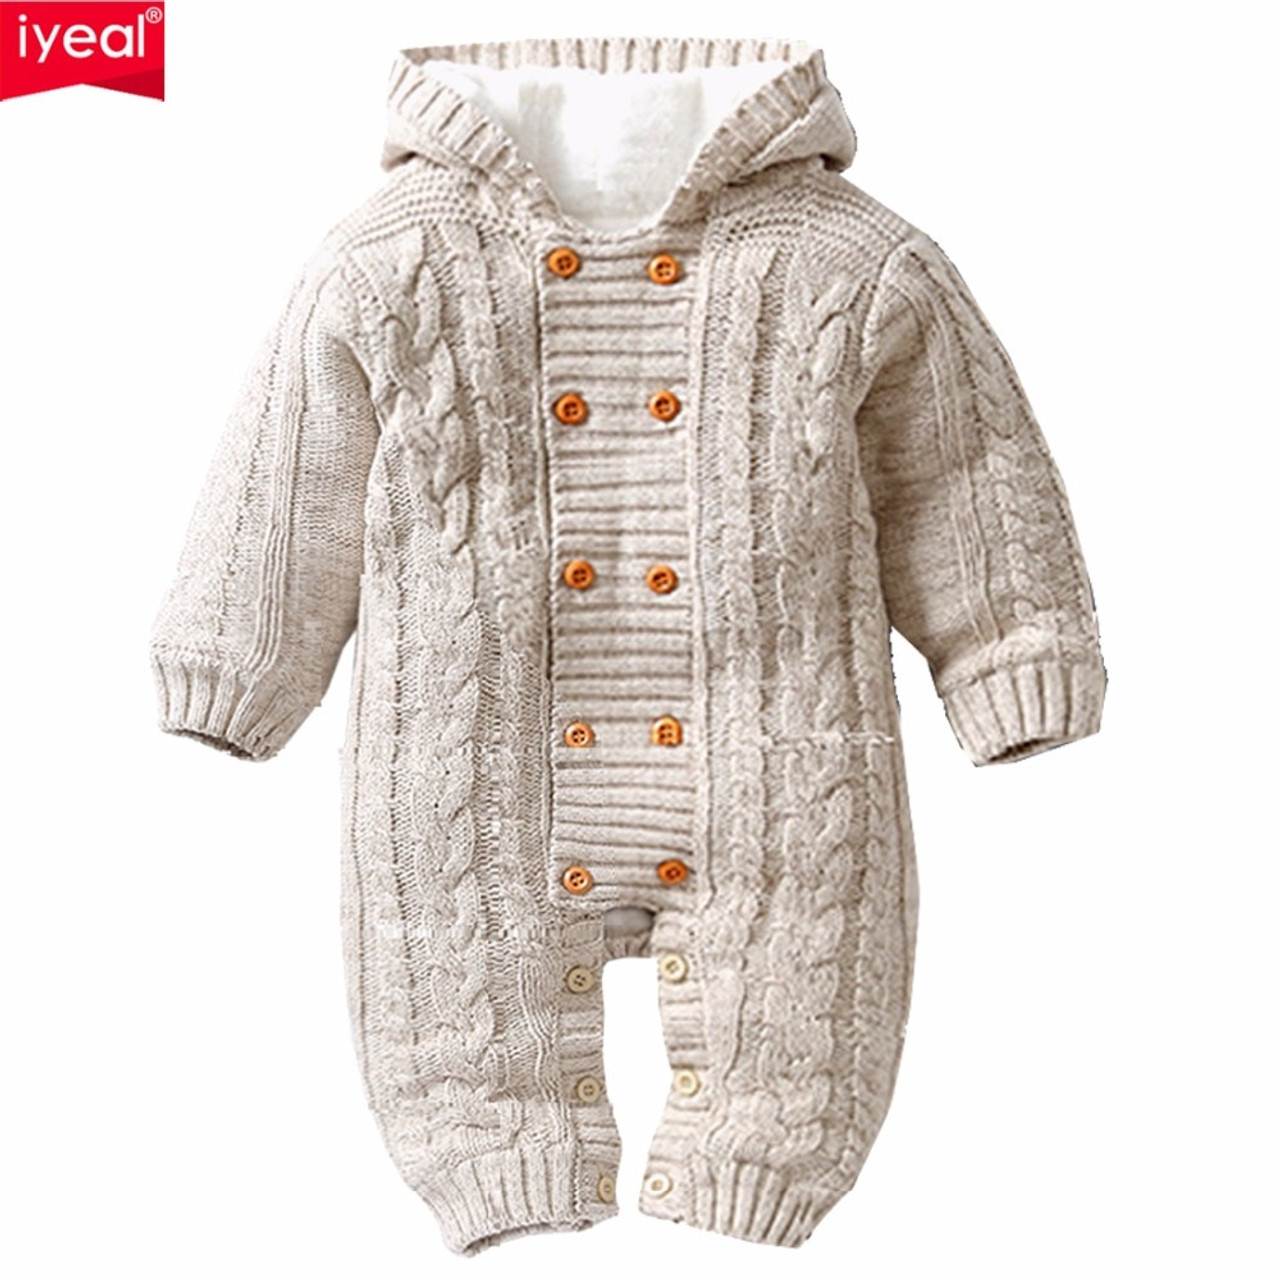 winter wear for newborn baby girl